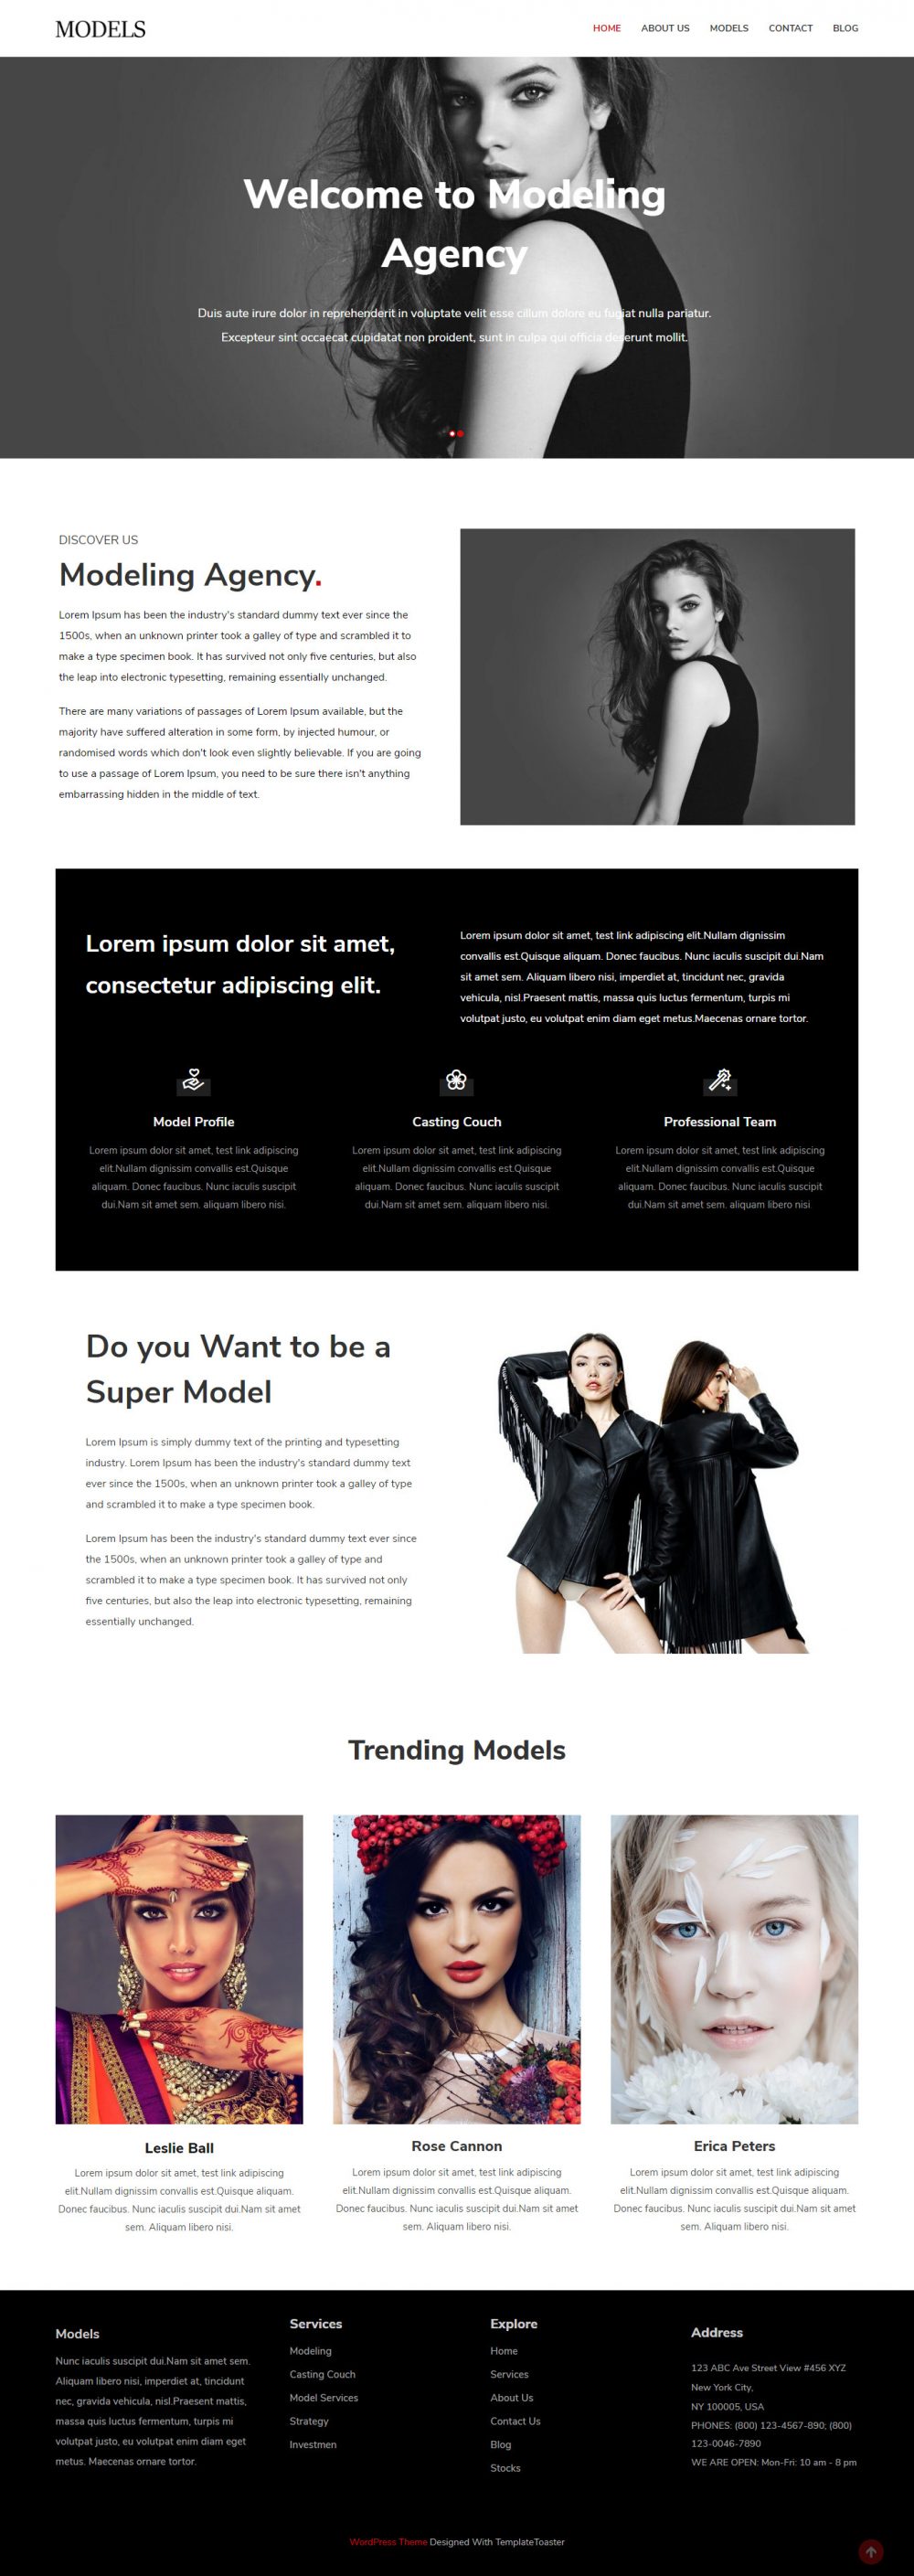 Models - Fashion & Modeling Agency WordPress Theme